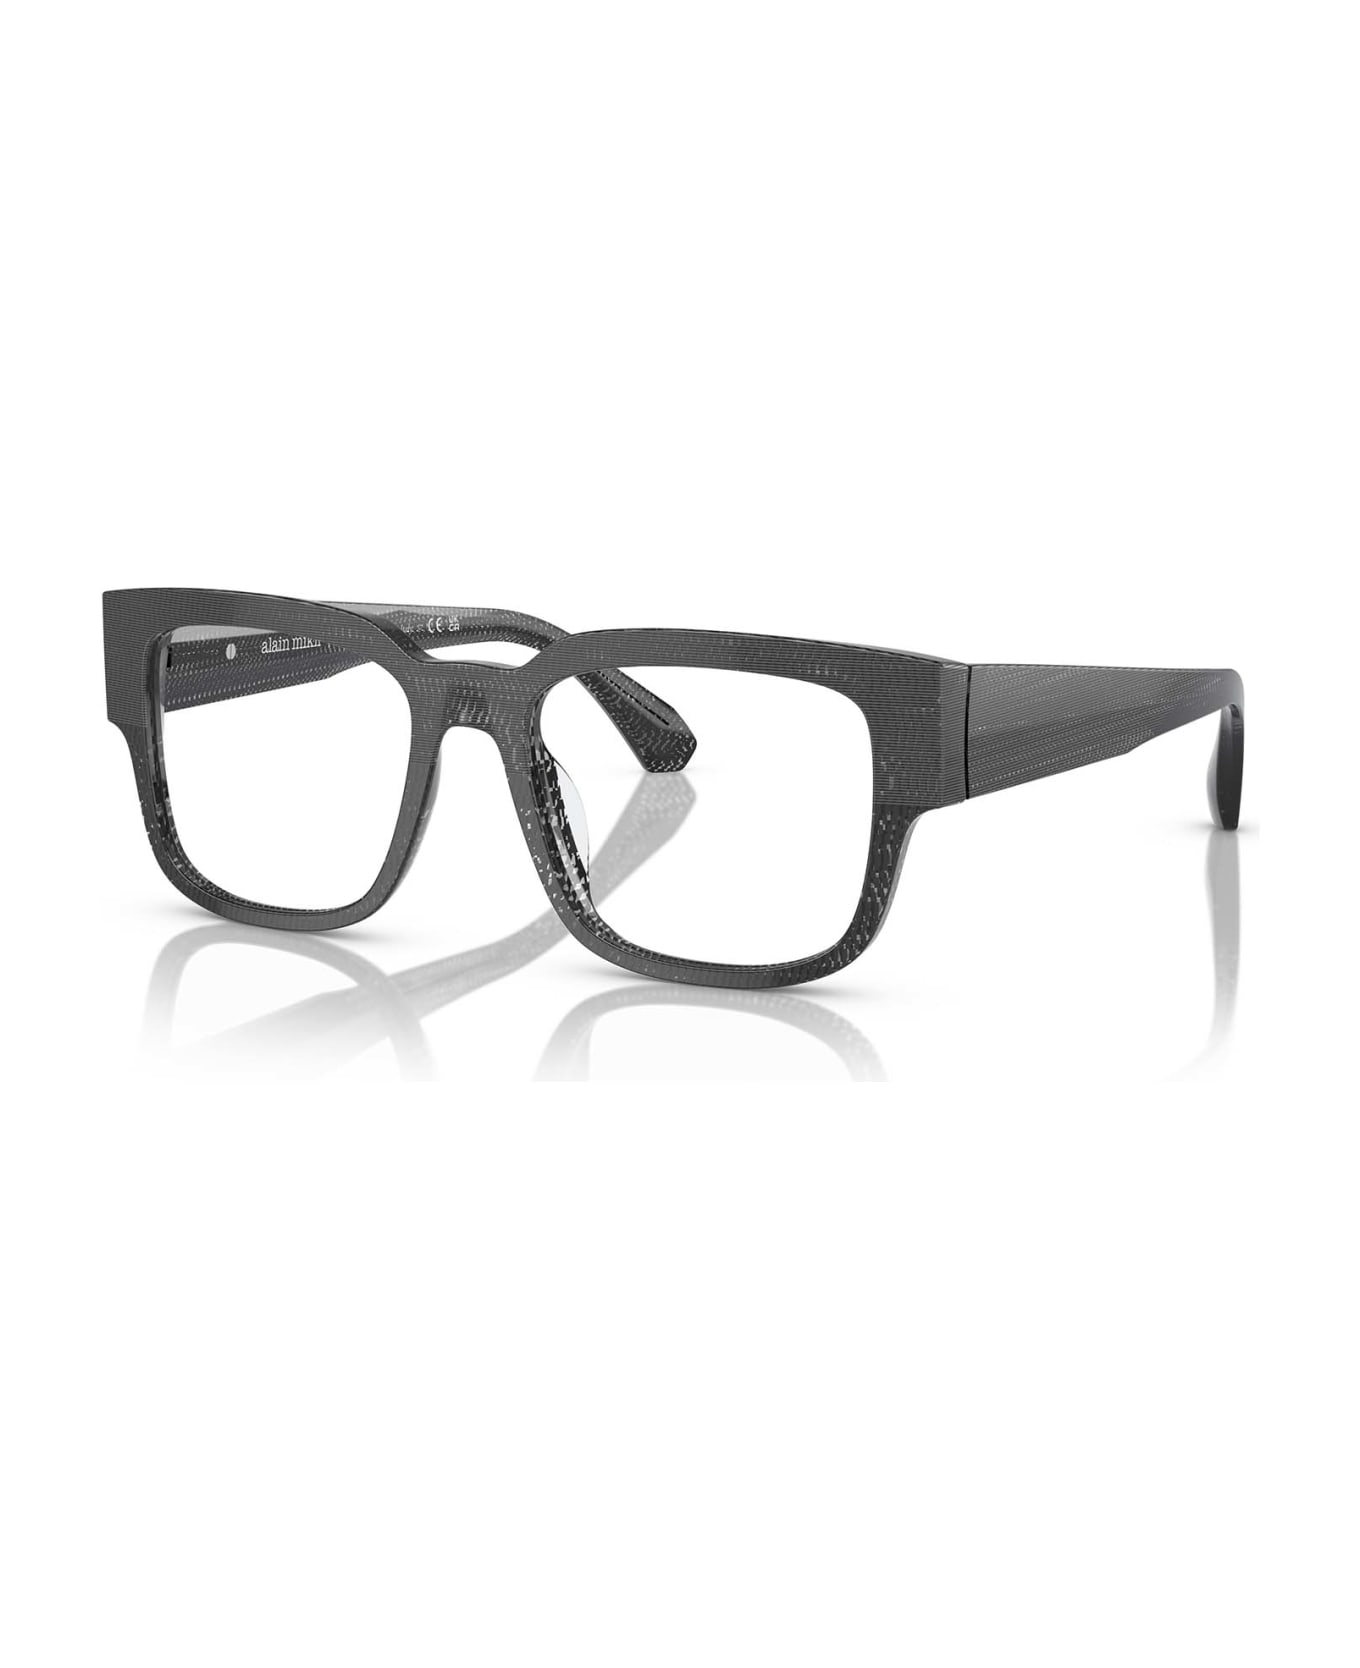 Alain Mikli A03504 New Pointillee Black Glasses - New Pointillee Black